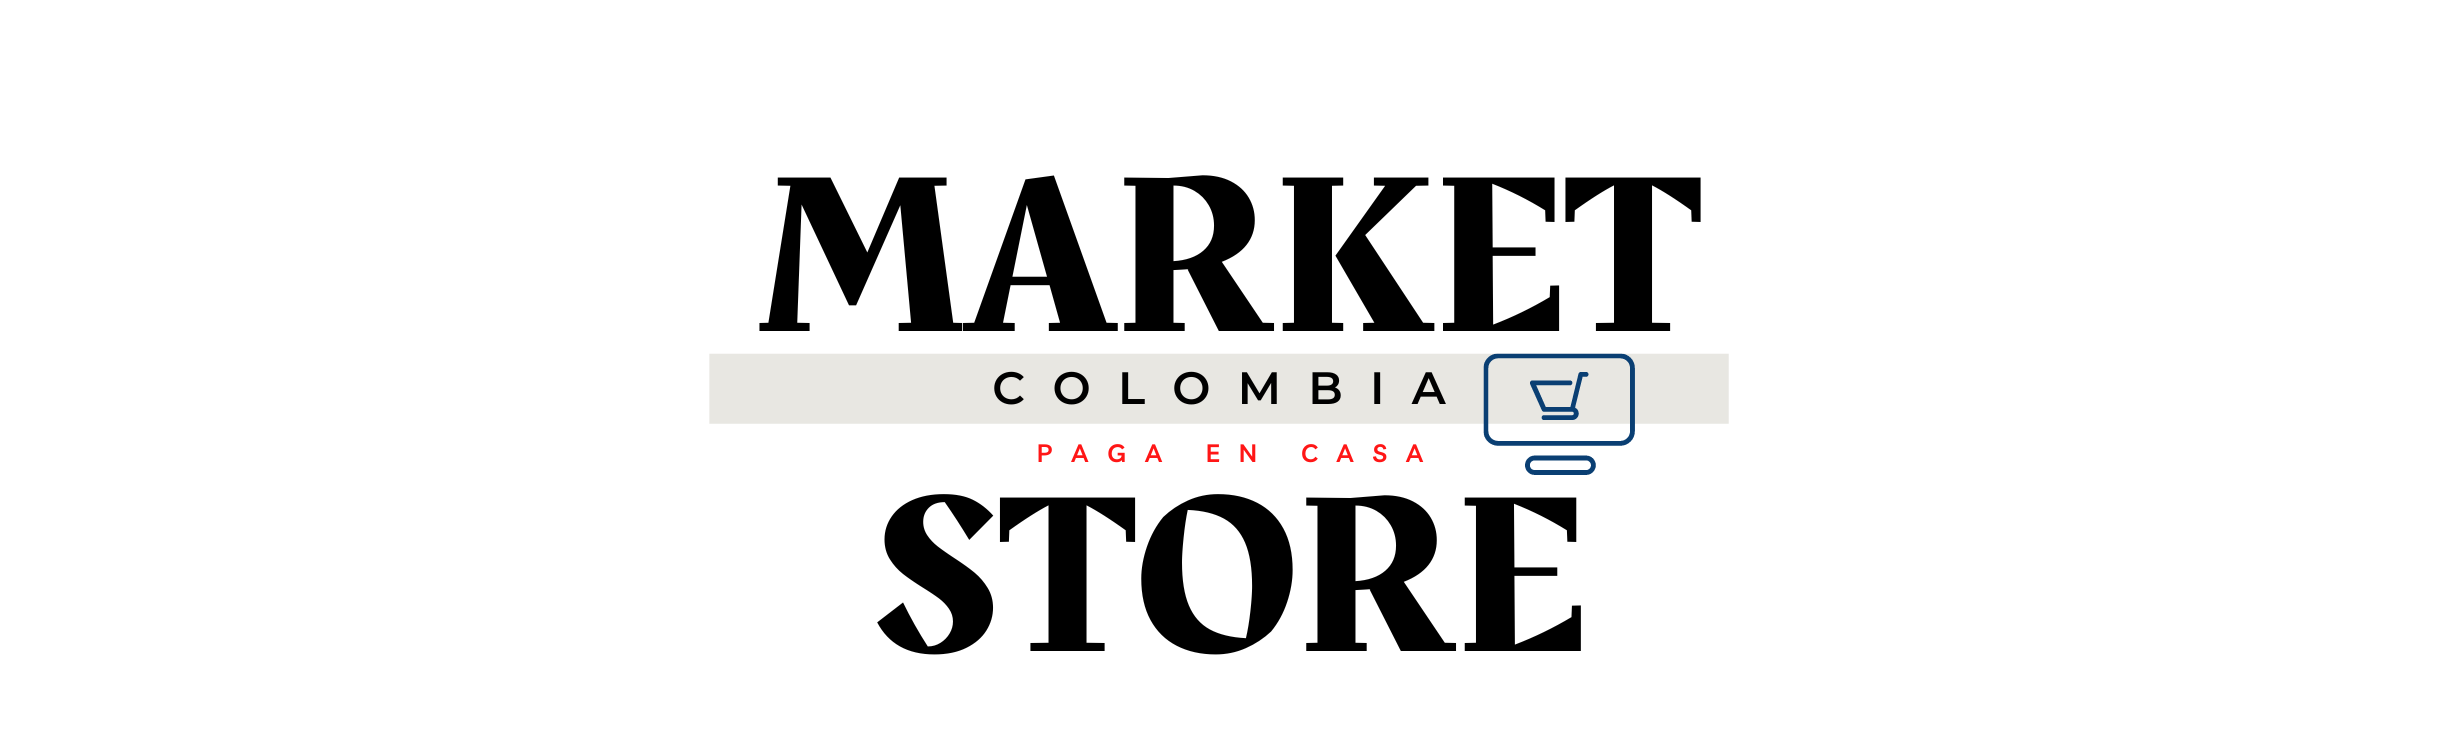 MarketStore Colombia